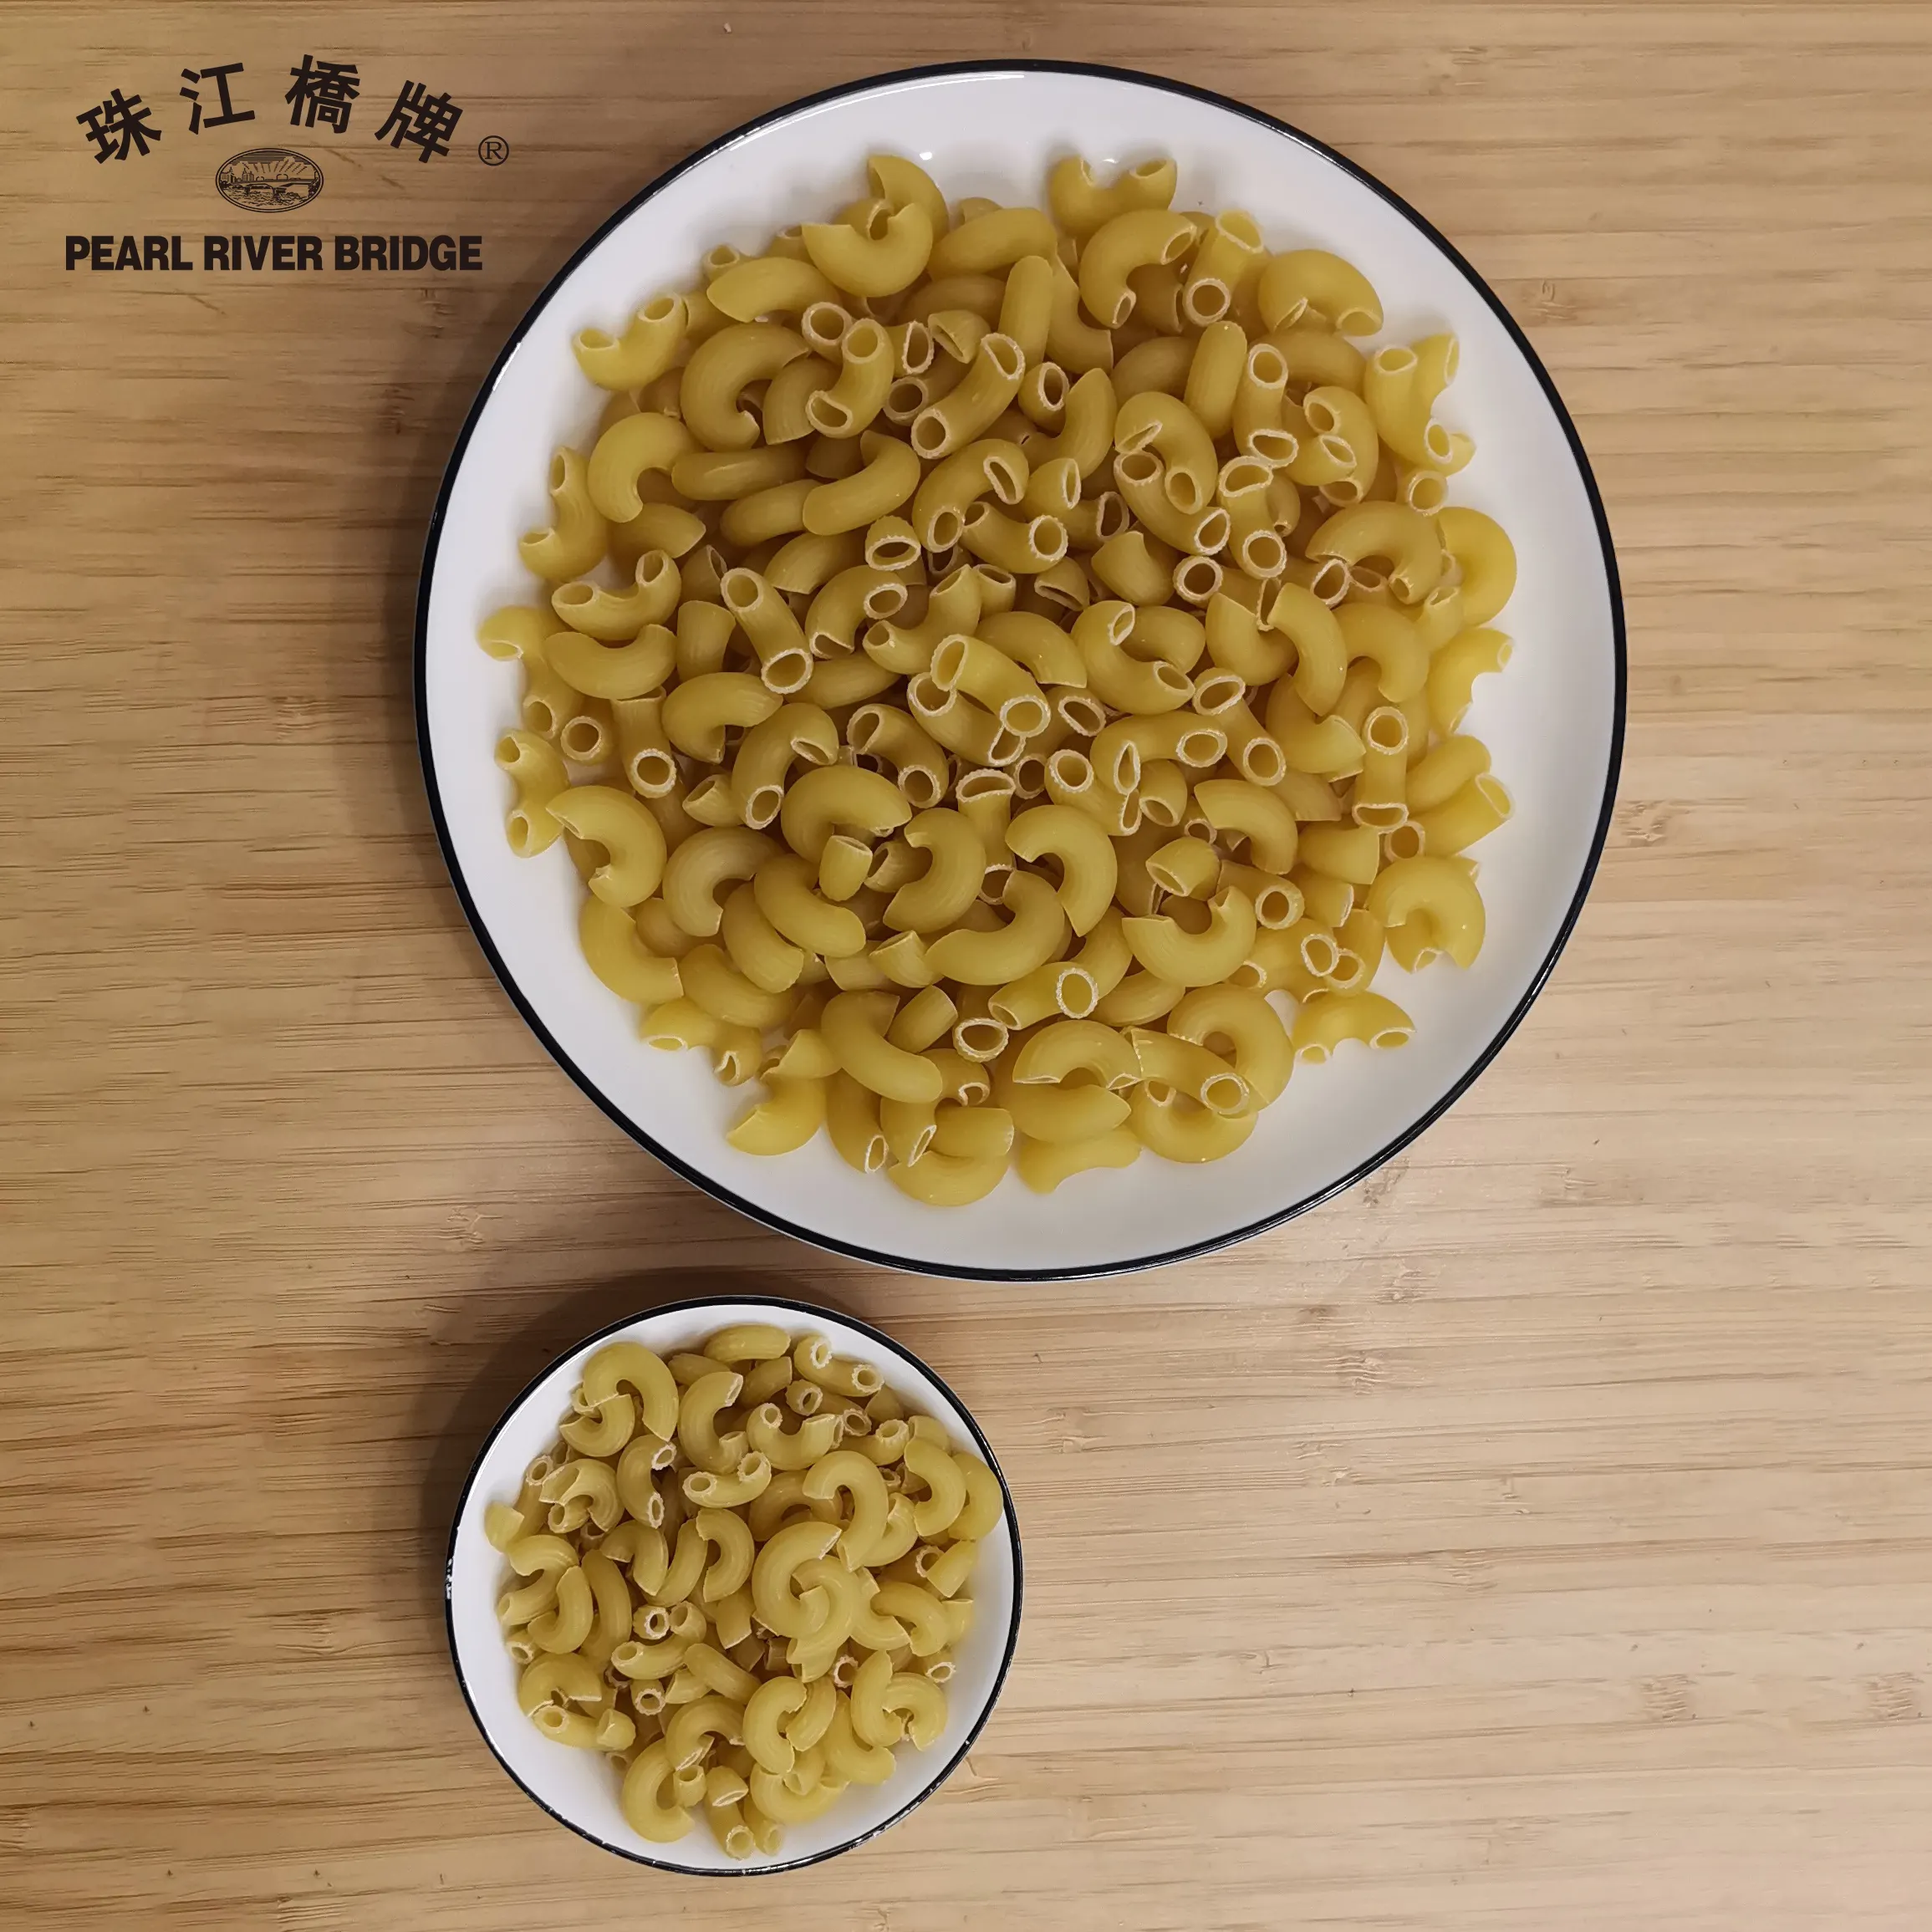 Wholesale Macaroni Tasty Factory Price Italy Noodles Pearl River Bridge Brand